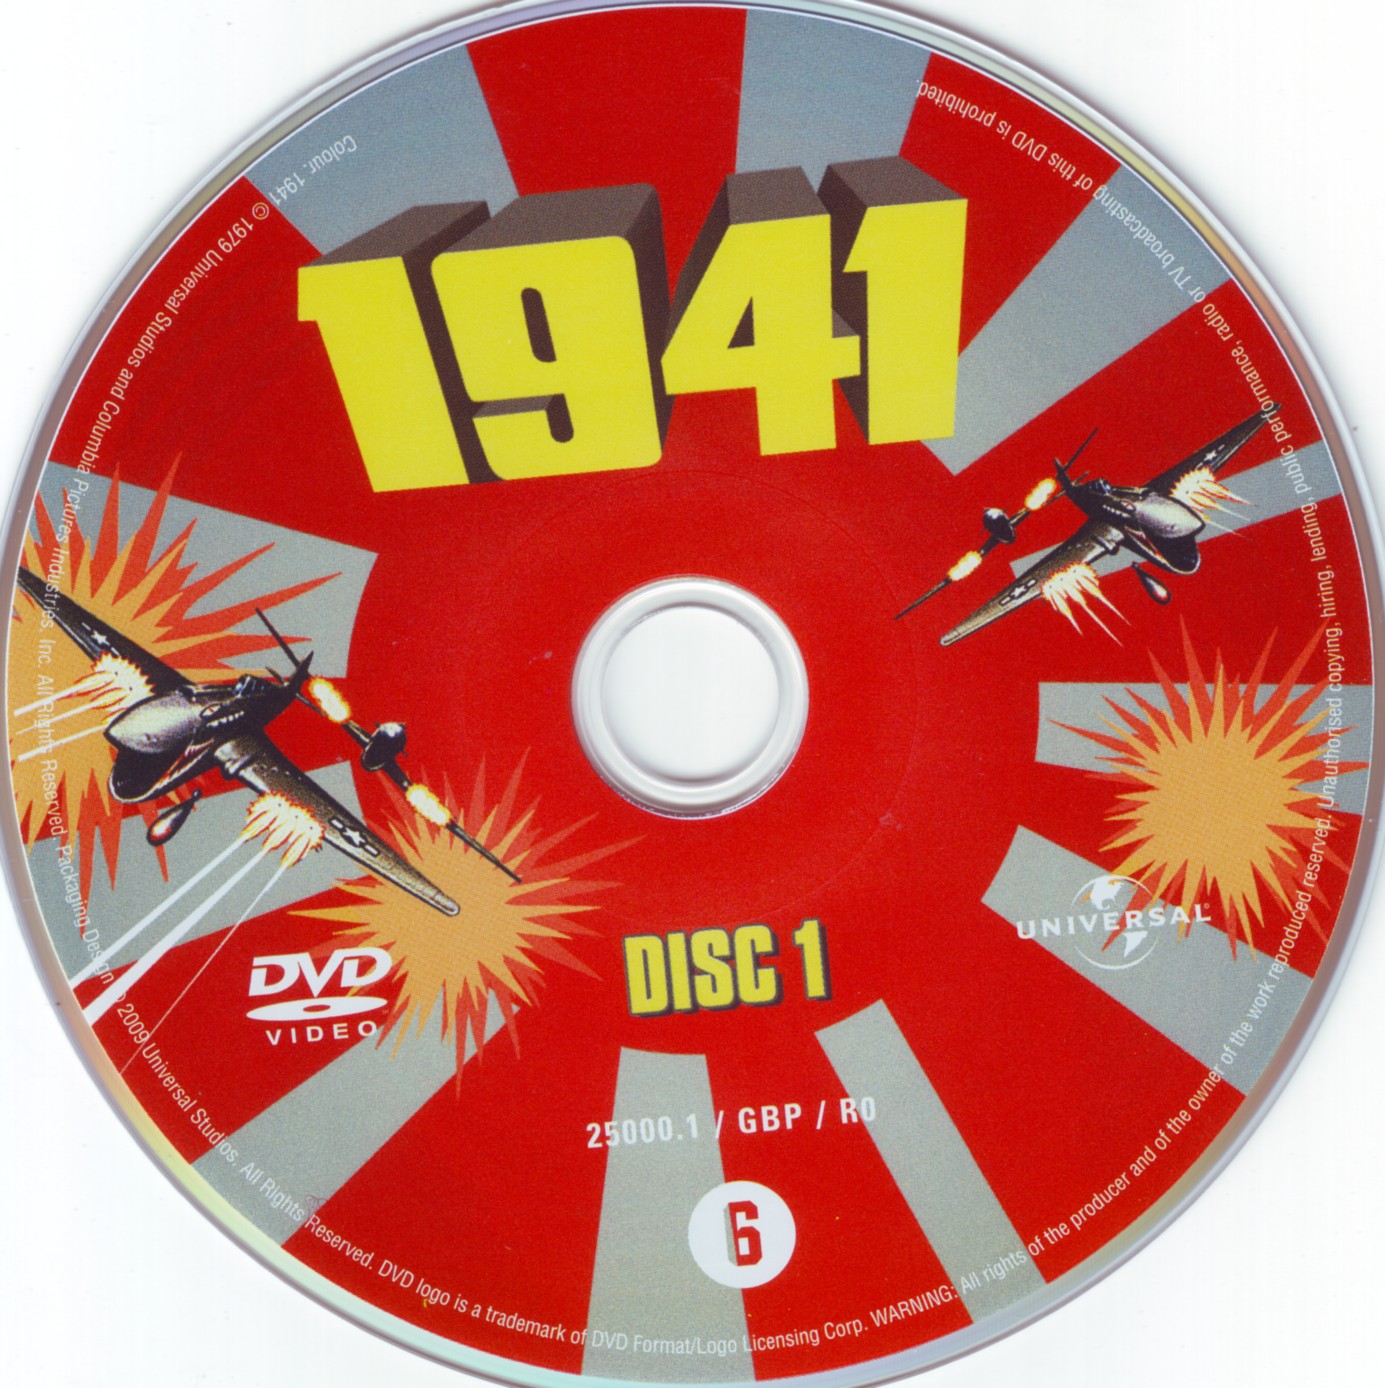 1941 DISC 1